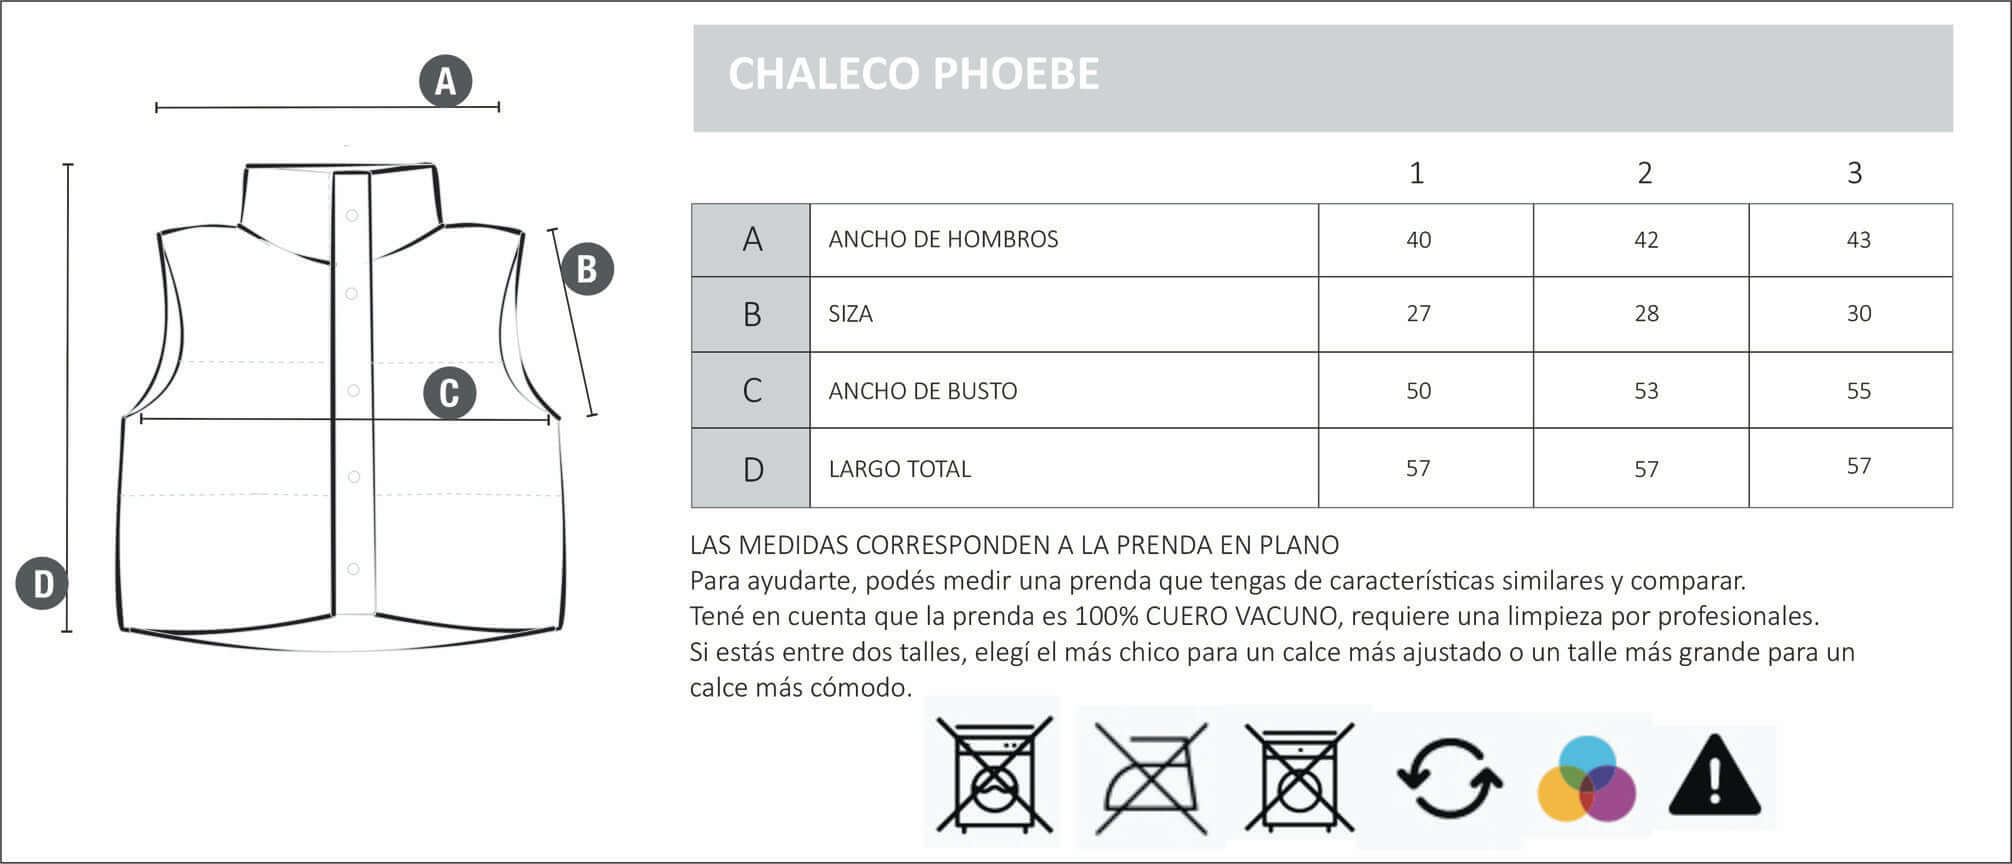 CHALECO PHOEBE